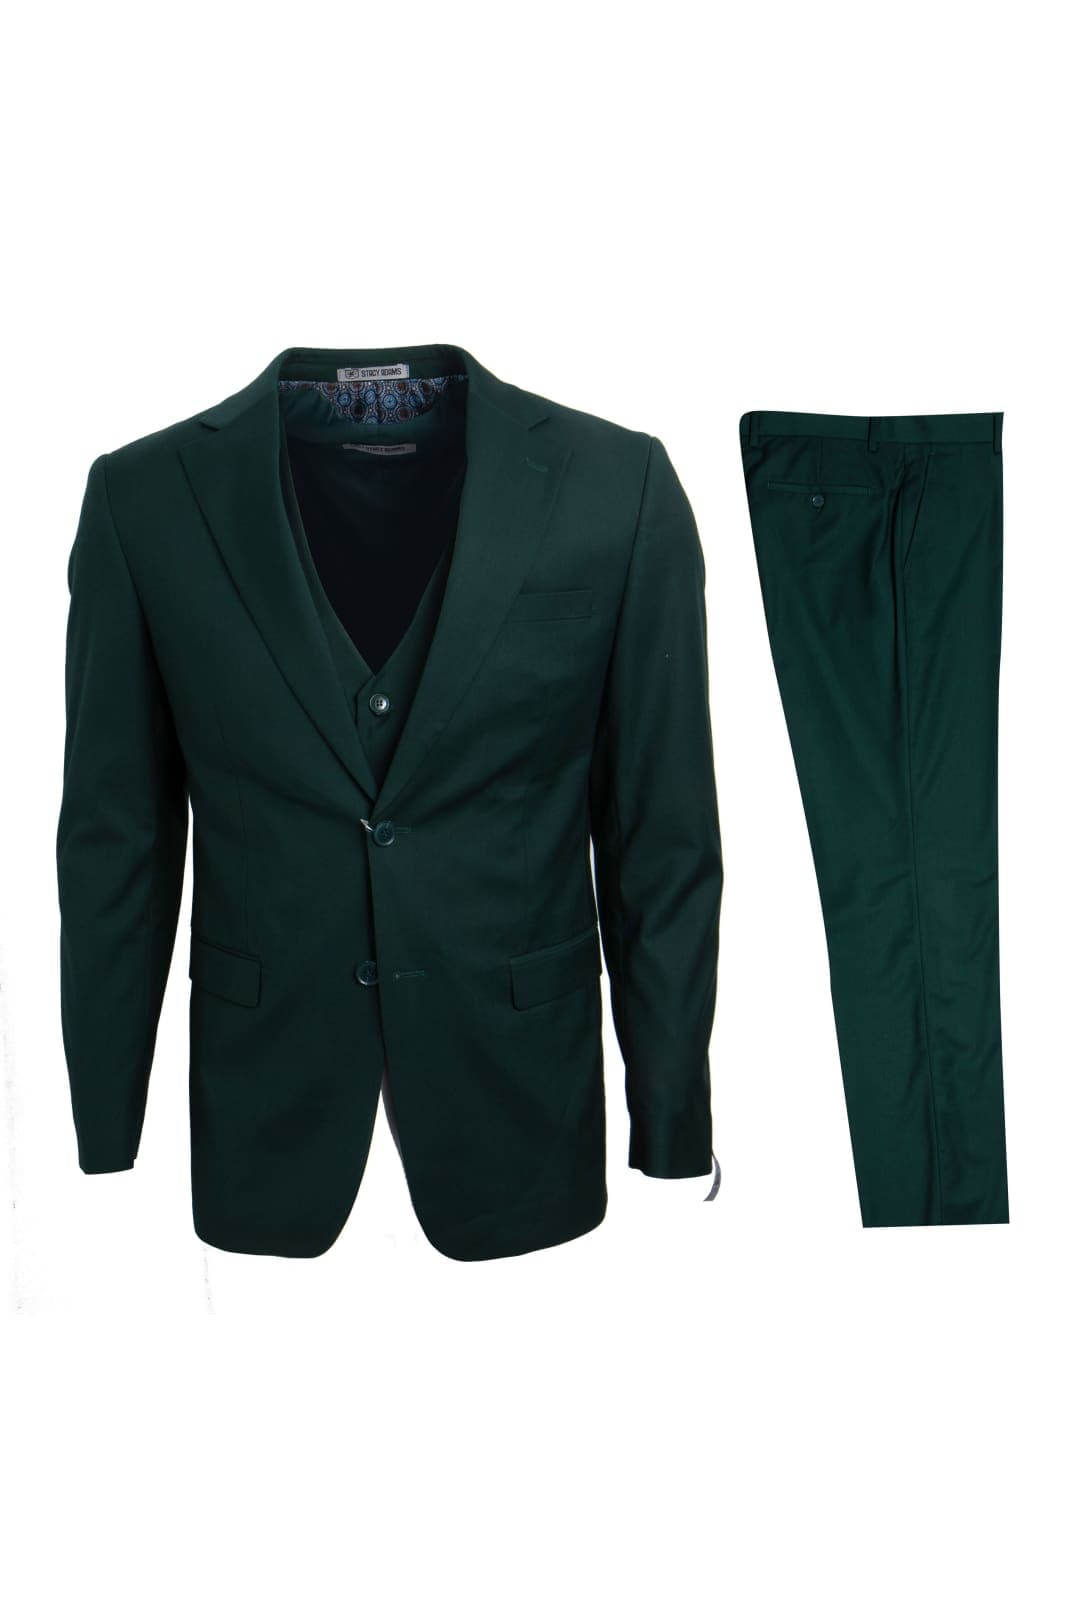 Green Stacy Adams Men’s Suit - Green / 34R / SM282H1-11 - Mens-suits